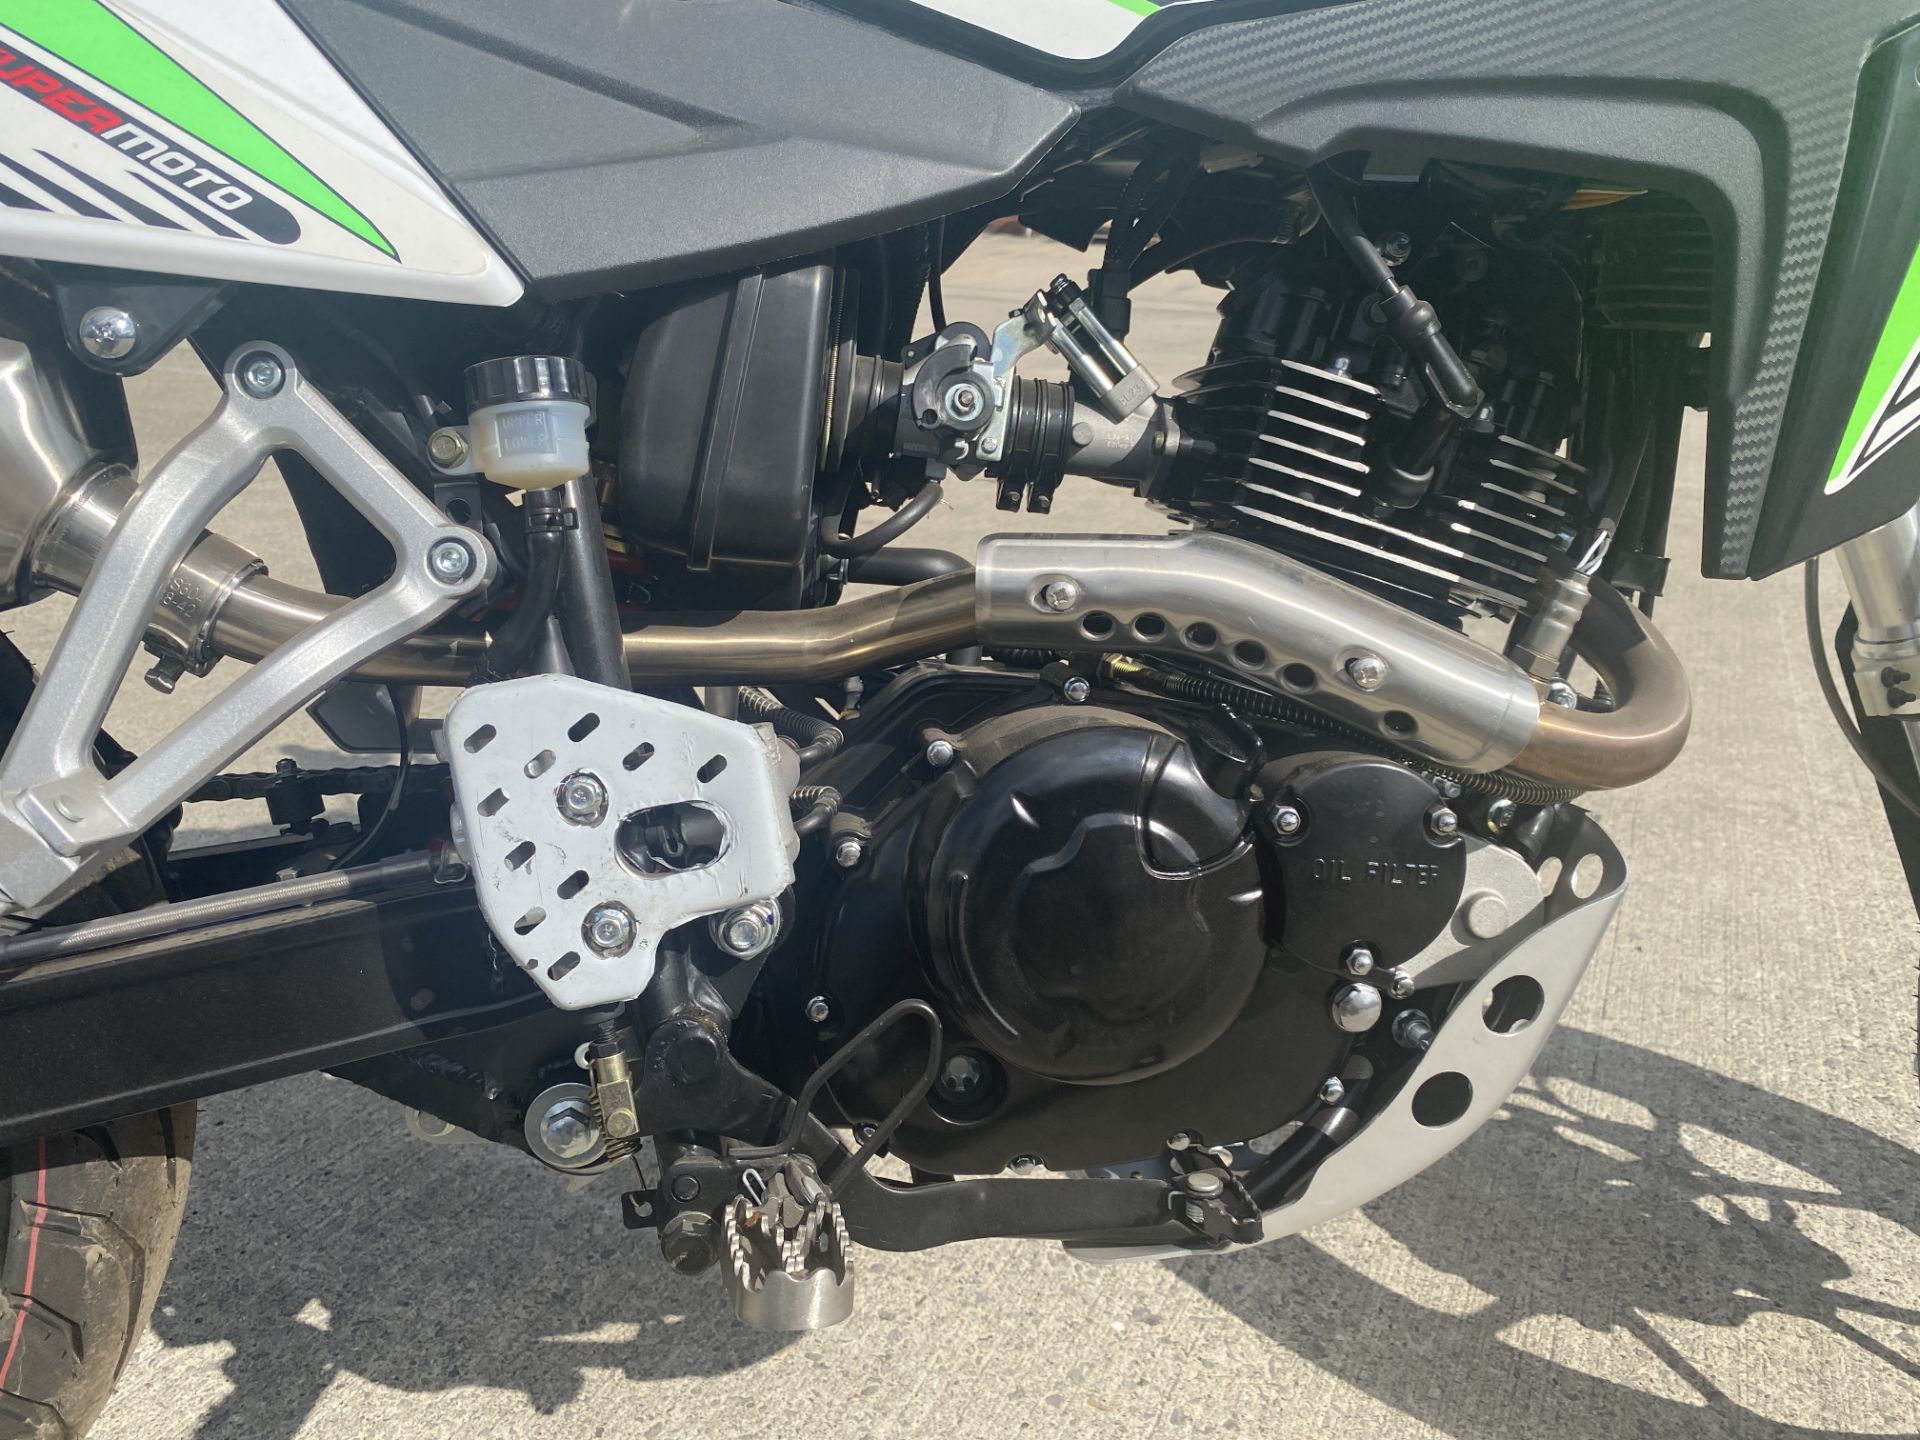 SINNIS APACHE 18 SUPERMOTO MOTORCYCLE - Petrol - Black/White/Green. - Image 12 of 19